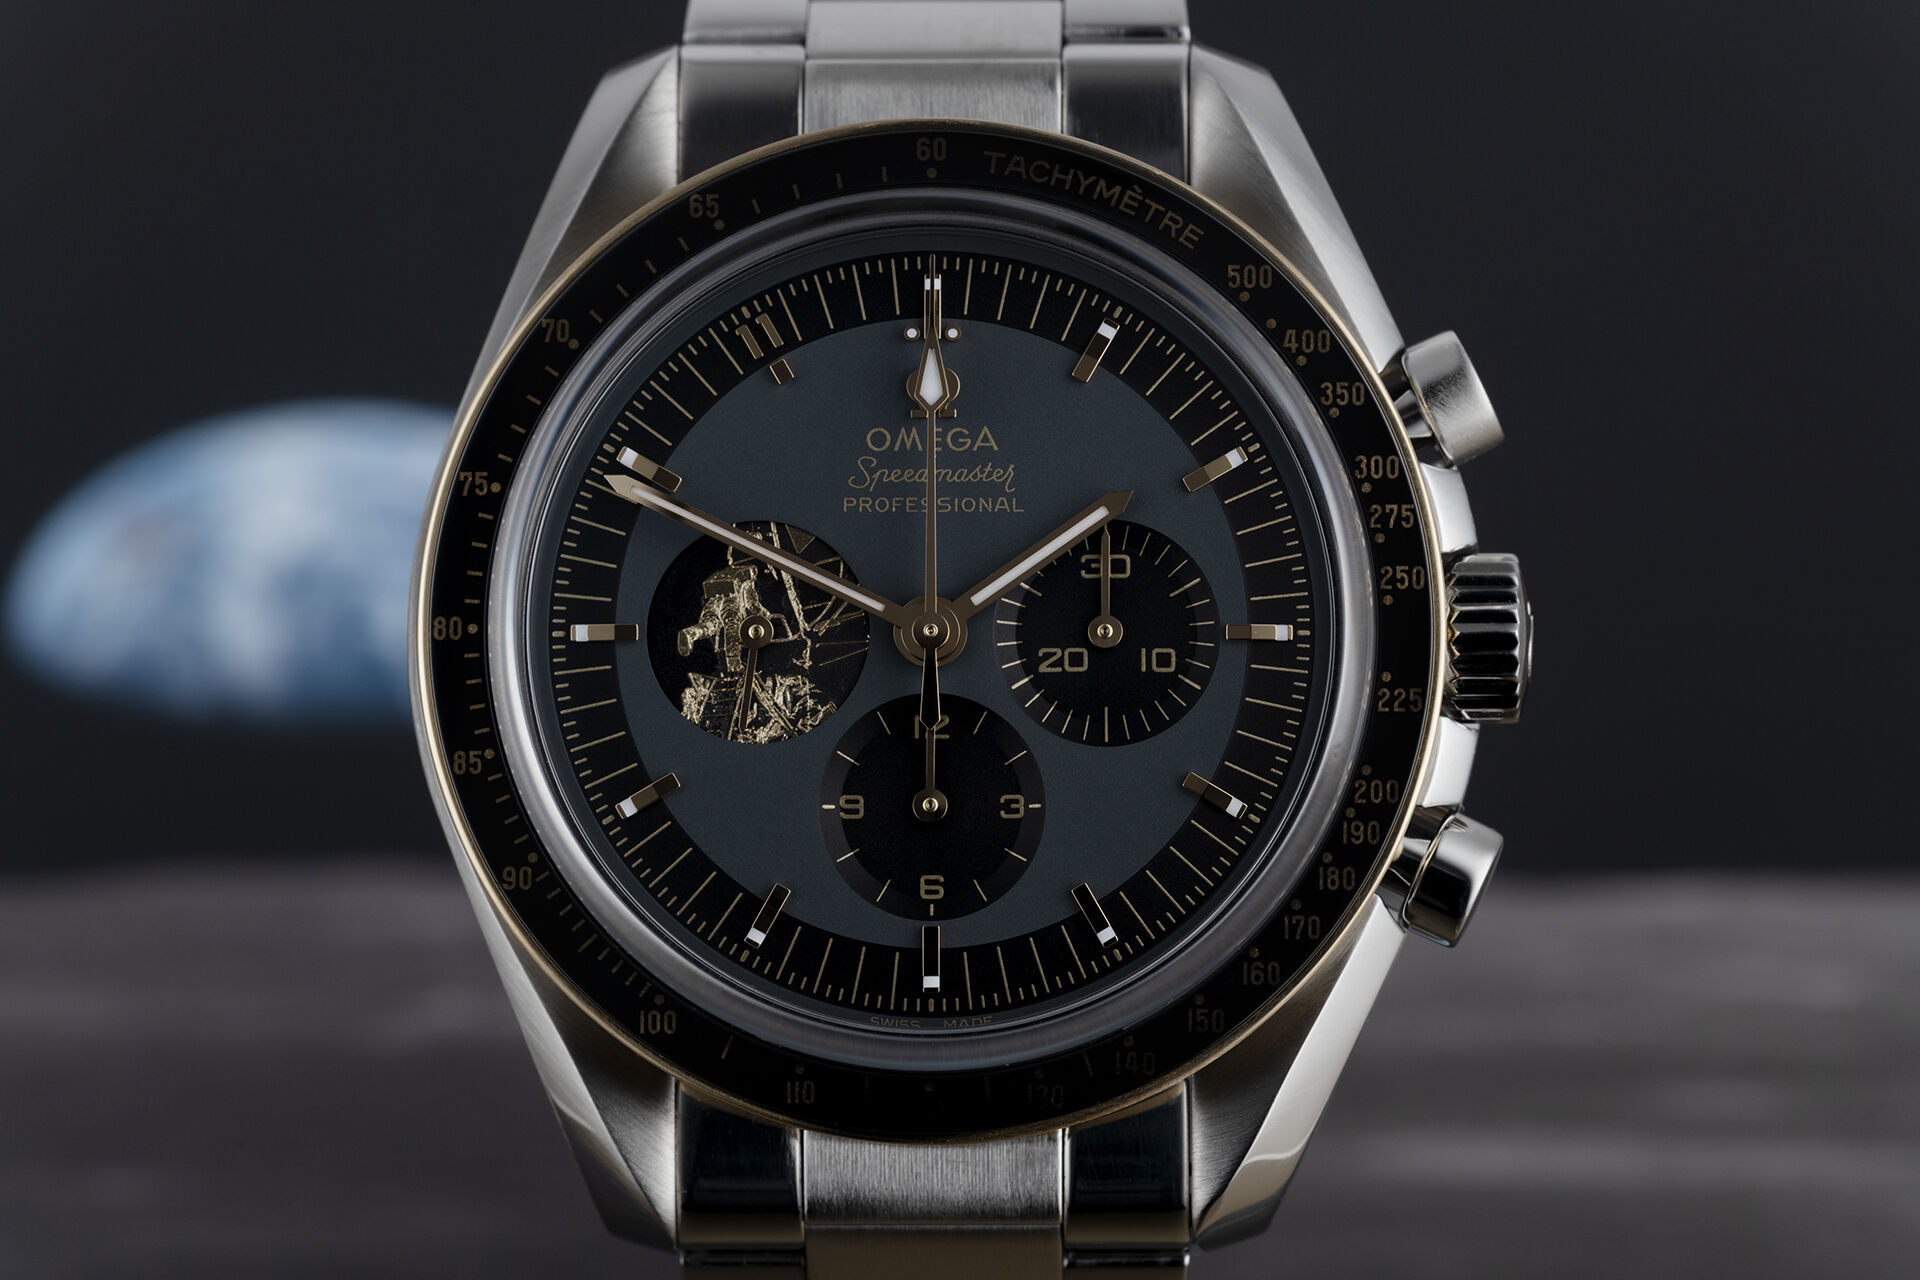 ref 31020425001001 | Apollo 11 - Limited Edition | Omega Speedmaster Professional